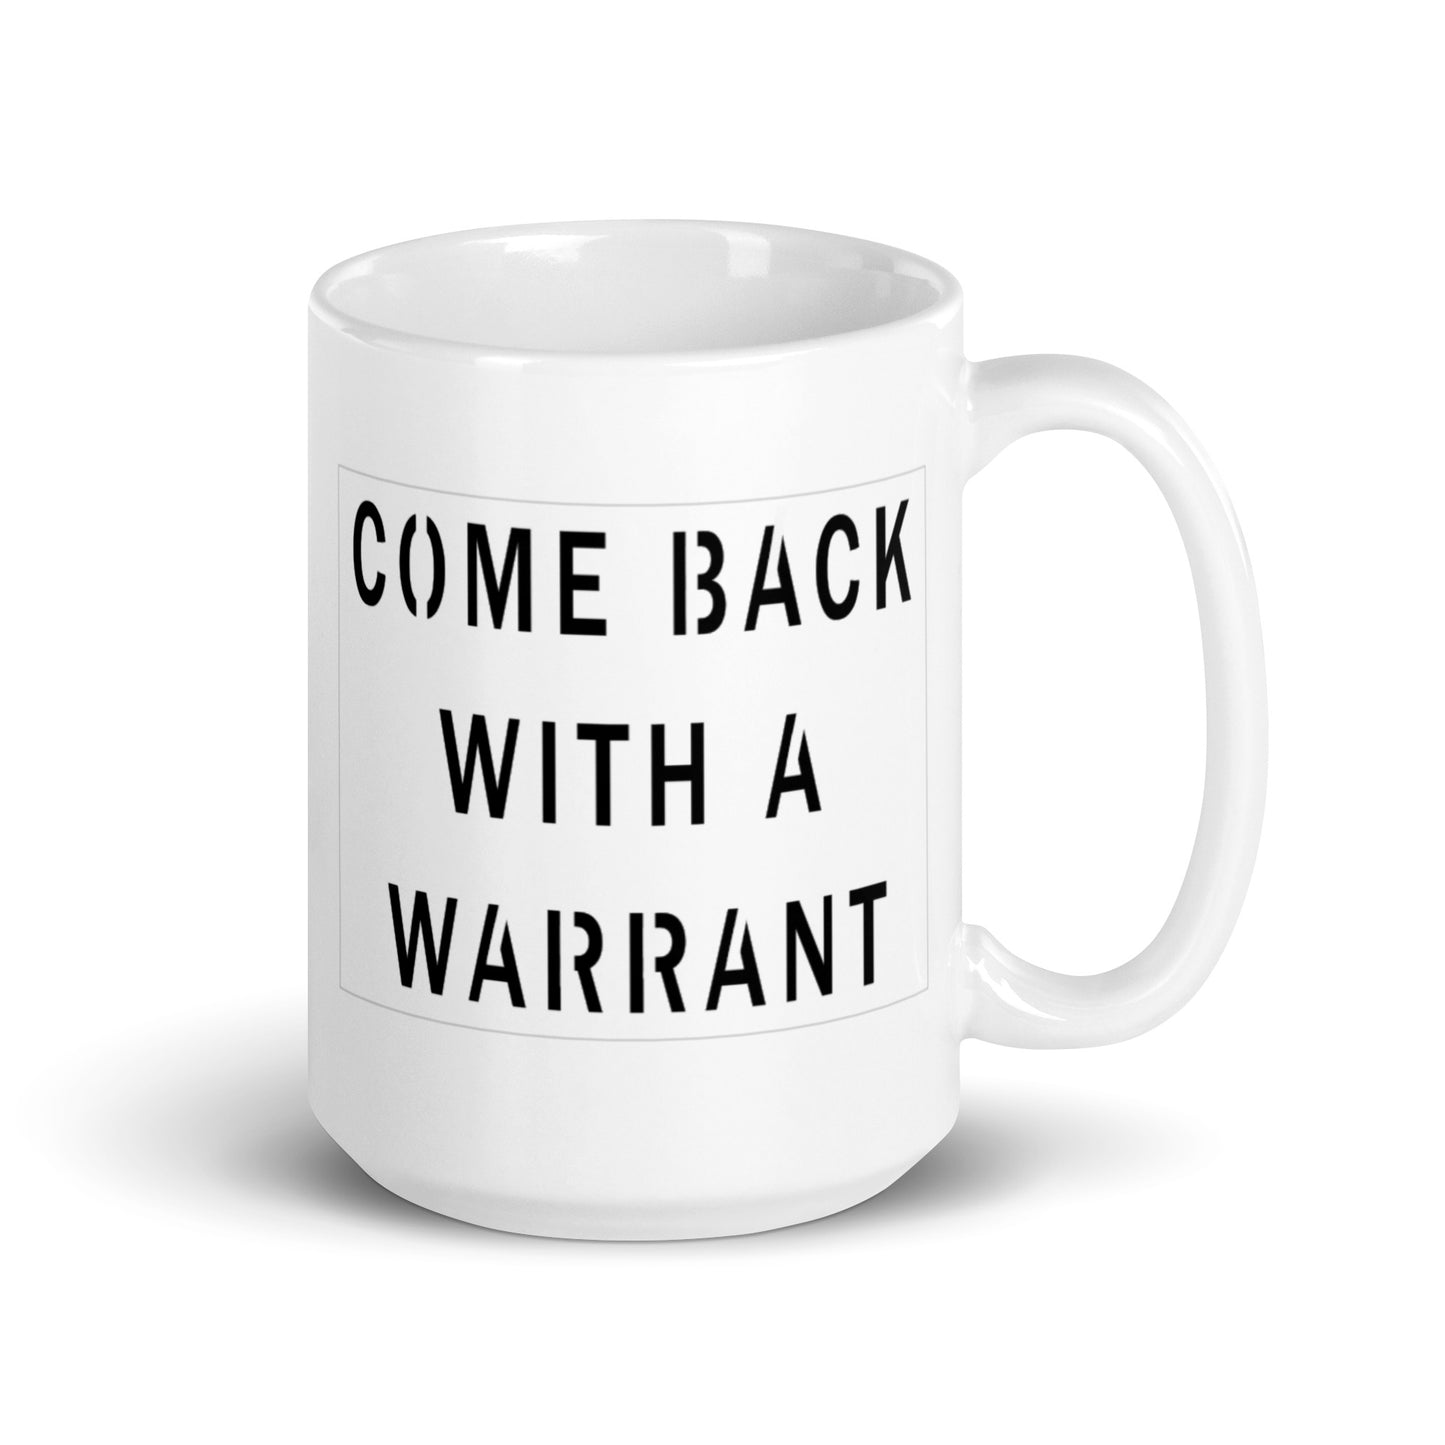 Come Back With a Warrant White glossy mug